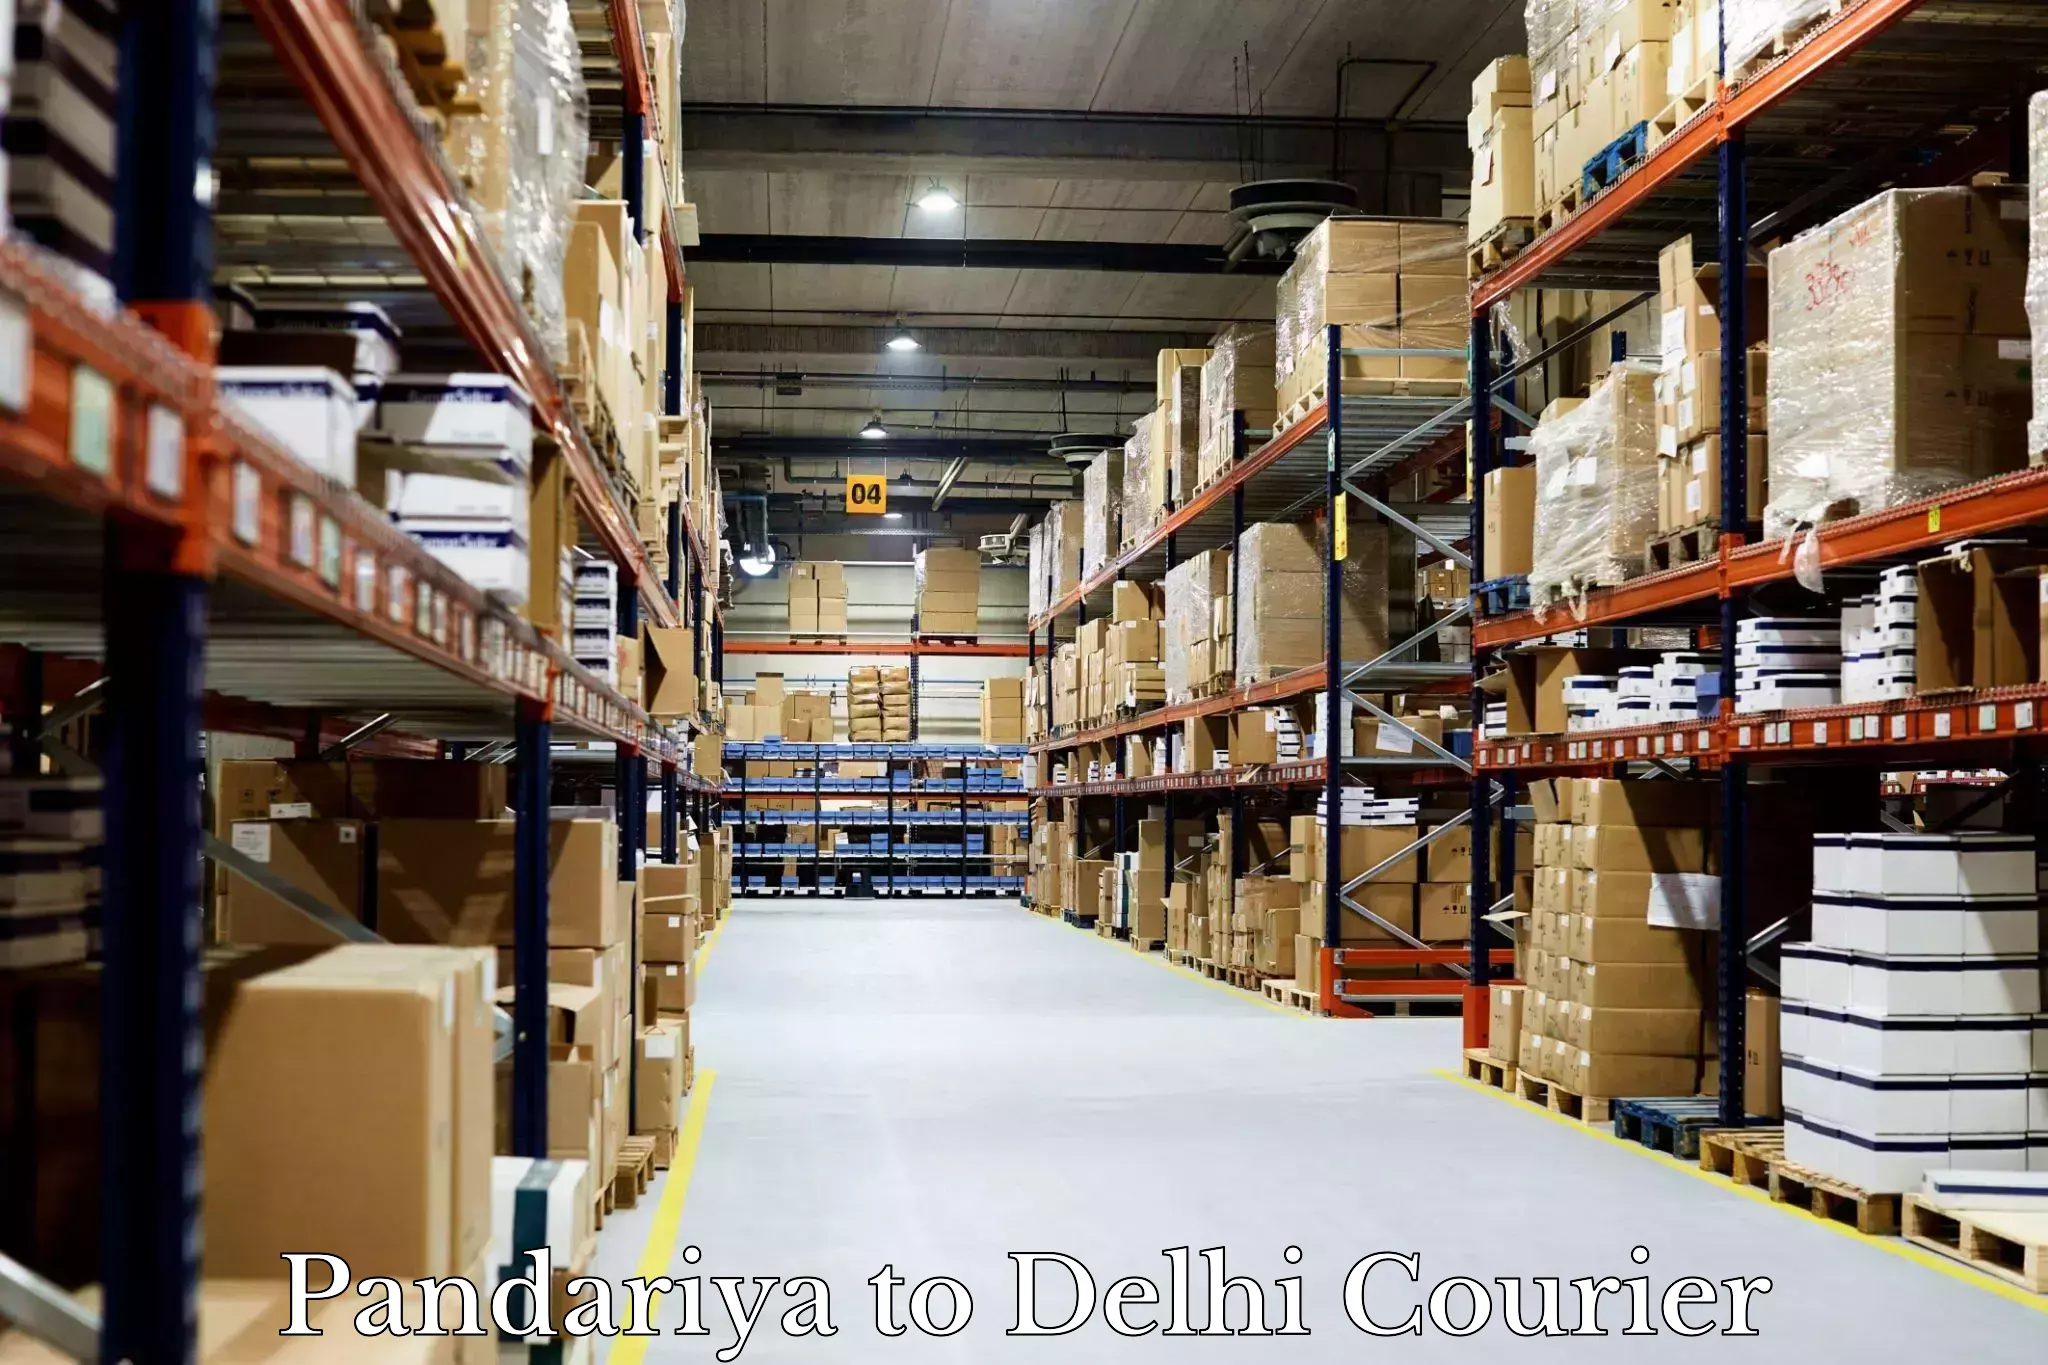 Global shipping networks Pandariya to Delhi